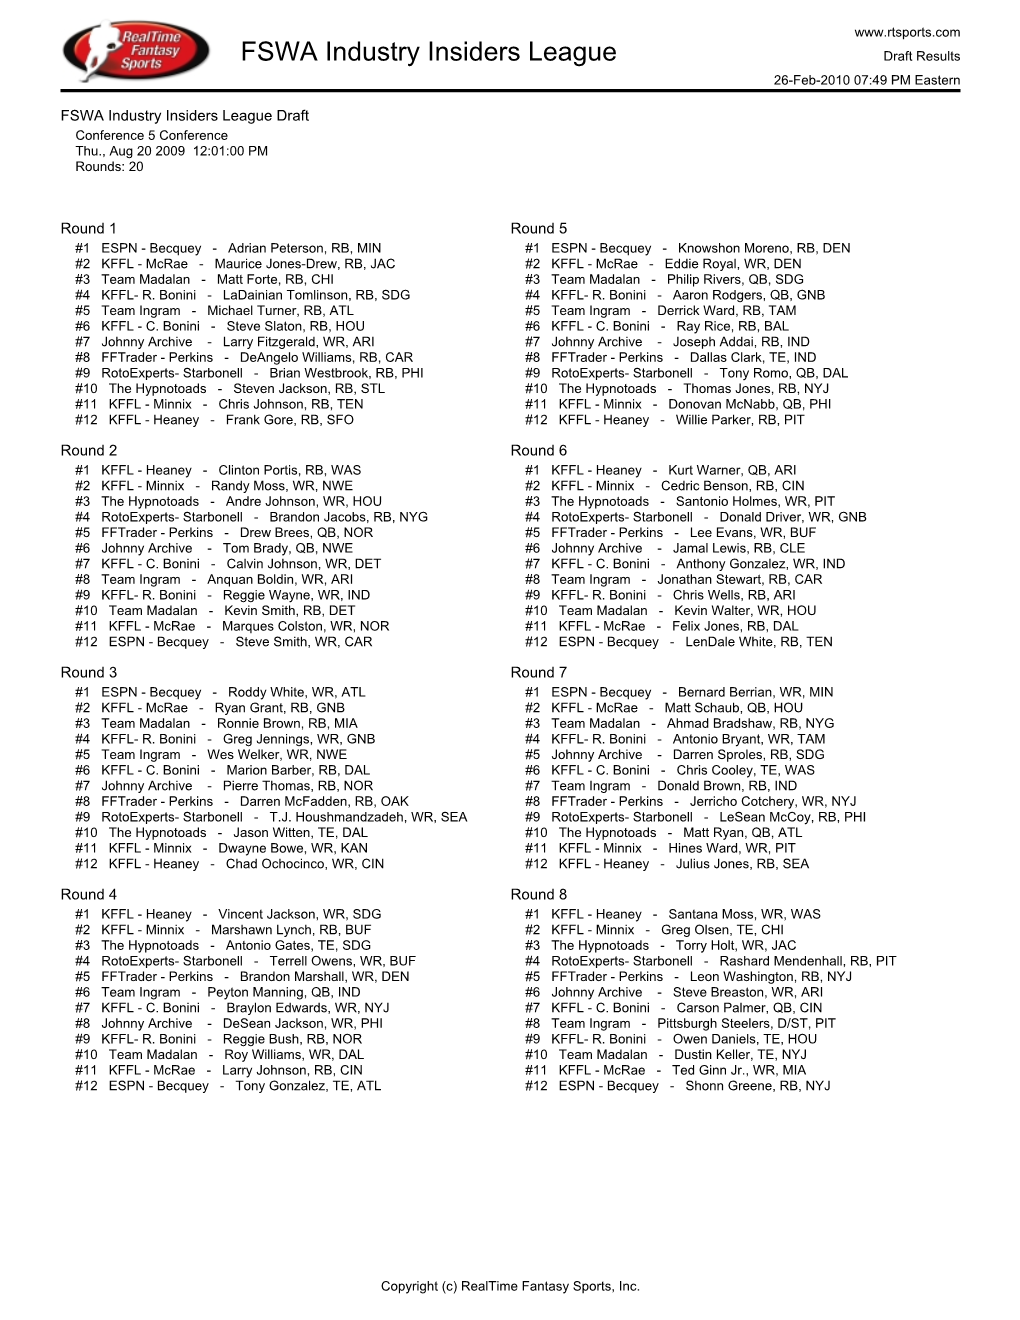 FSWA Industry Insiders League Draft Results 26-Feb-2010 07:49 PM Eastern